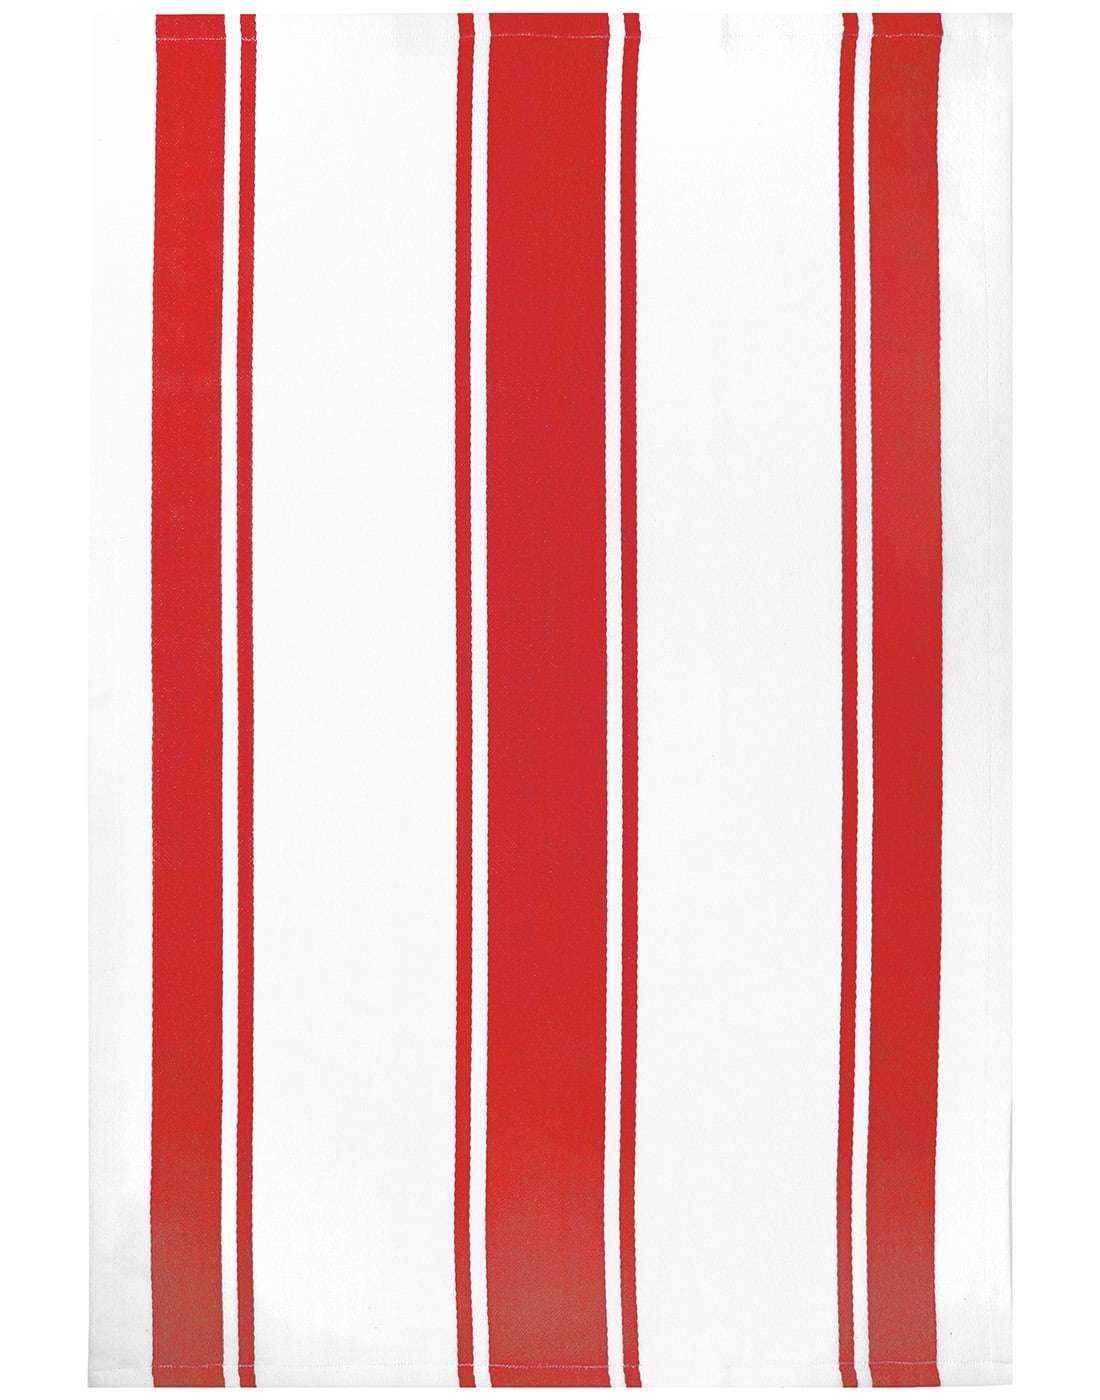 Mu Kitchen Crimson Modern Stripe Terry Towel – the international